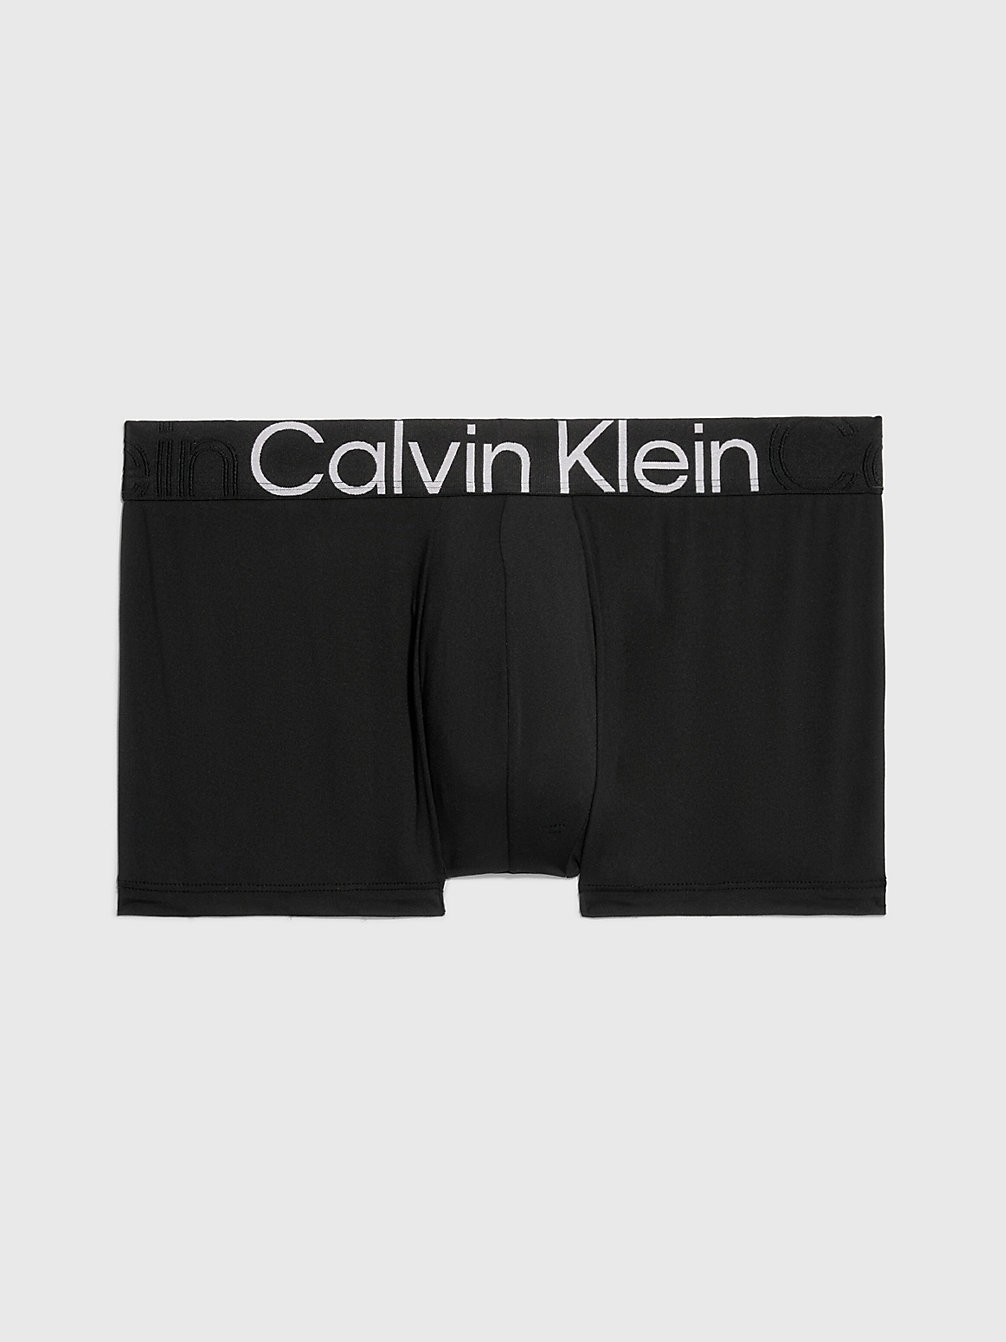 BLACK Low Rise Trunks - Effect undefined men Calvin Klein